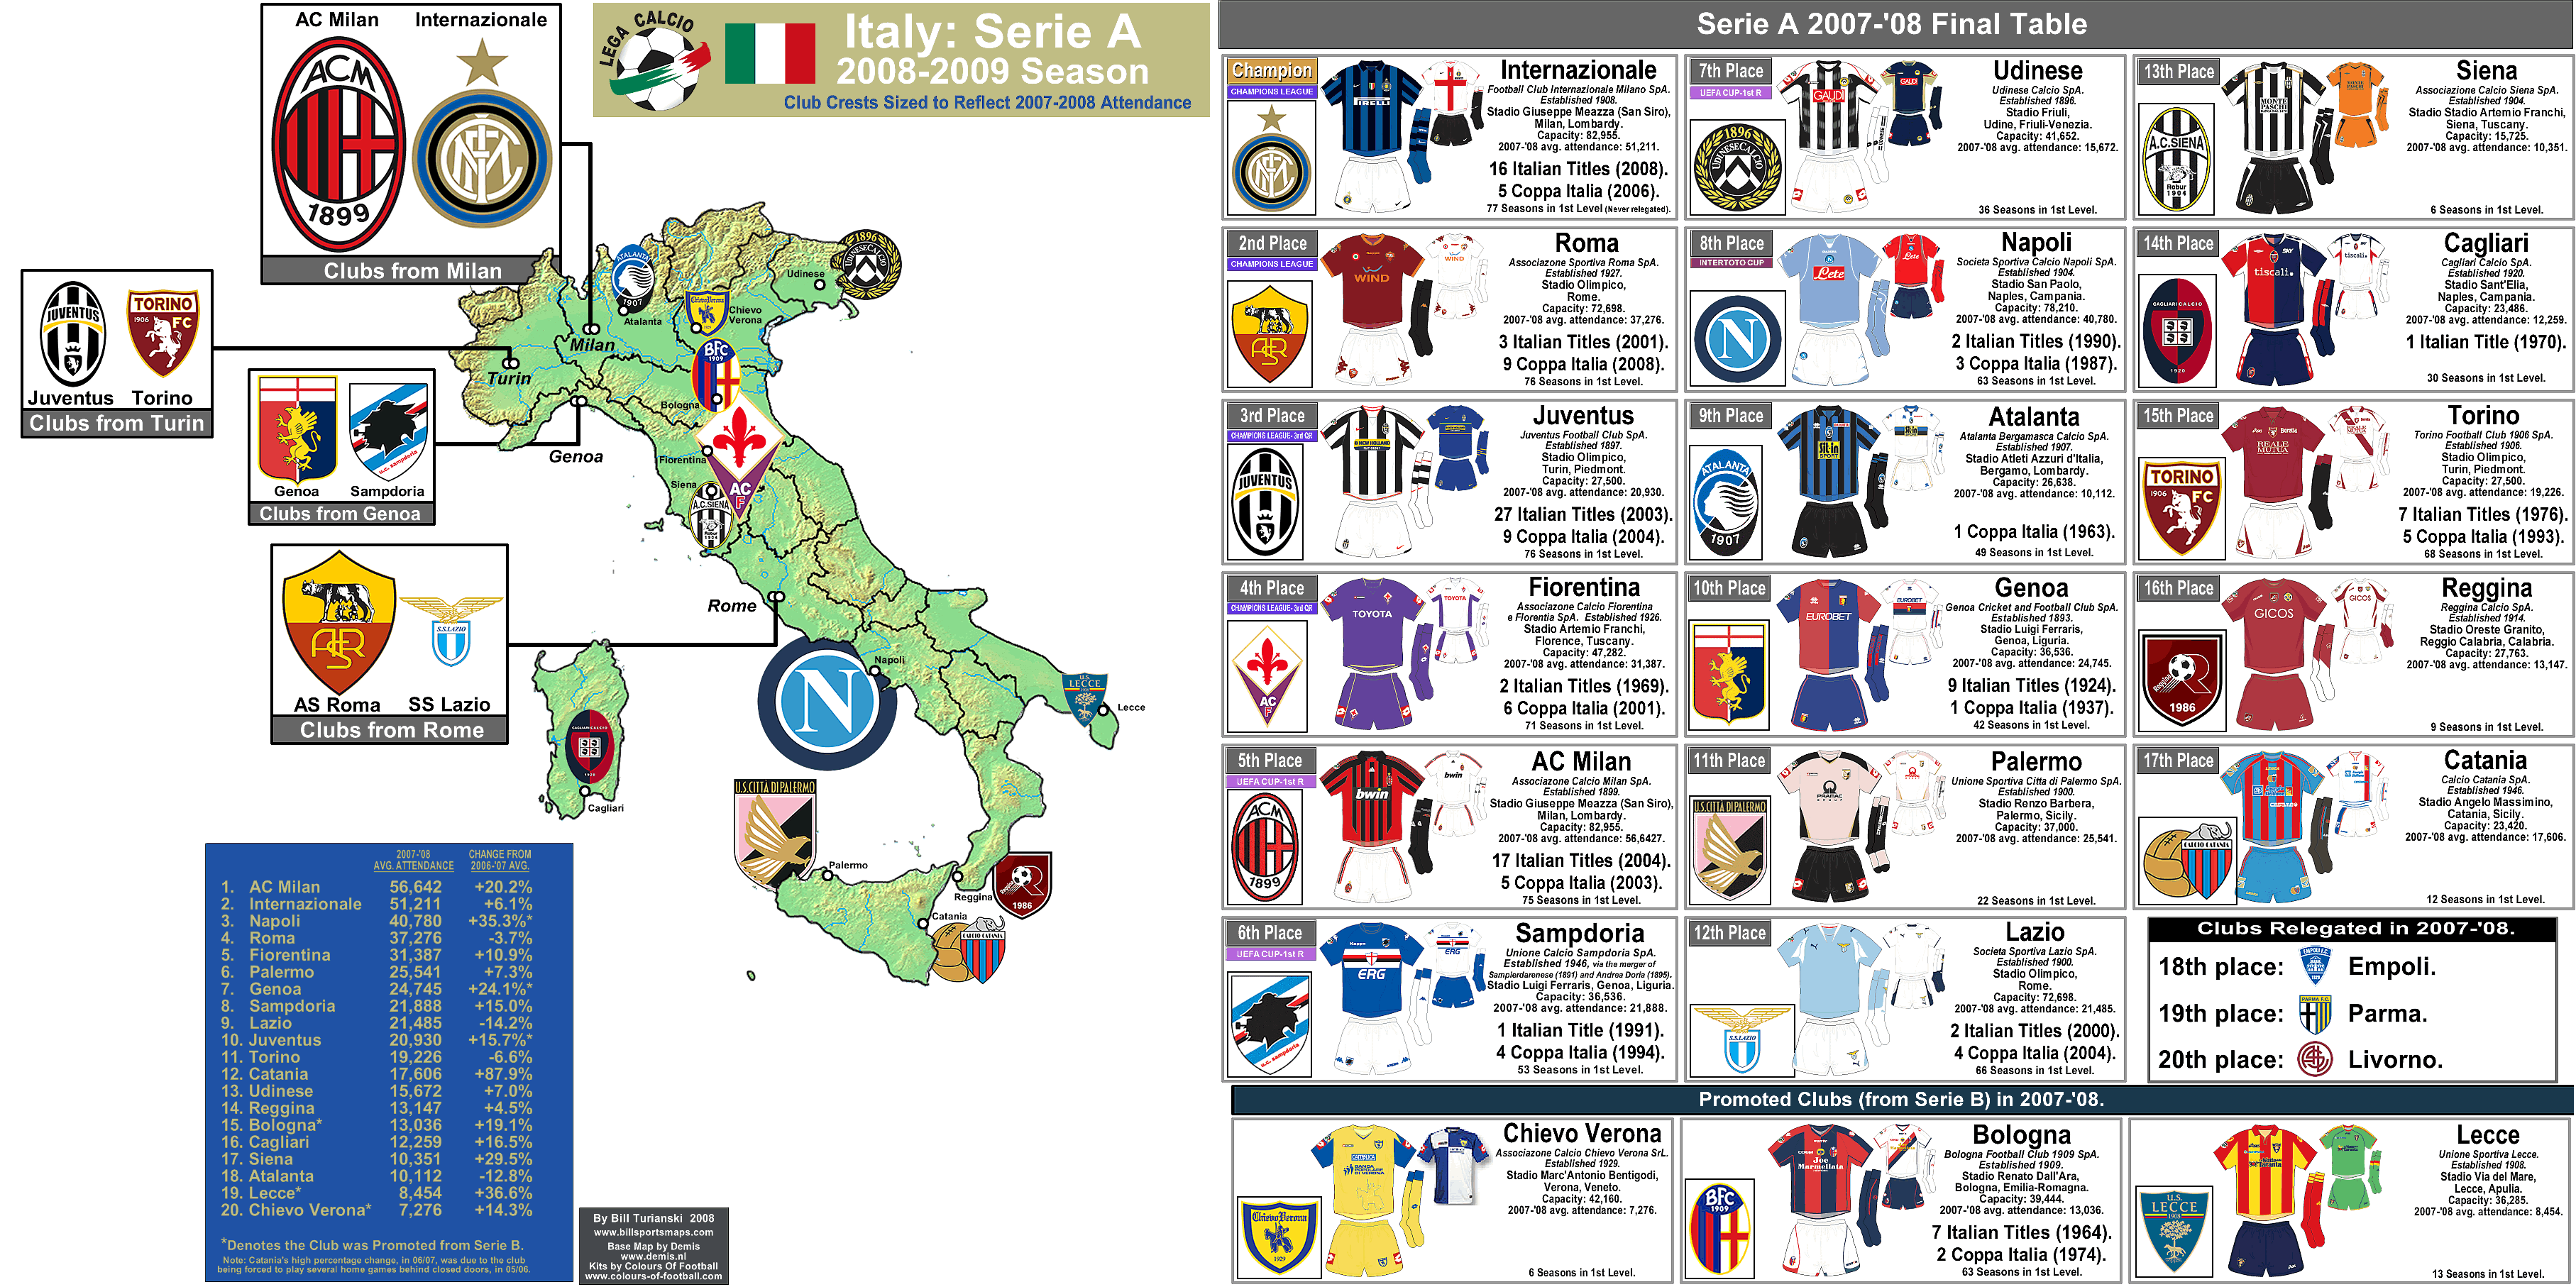 Serie A Teams